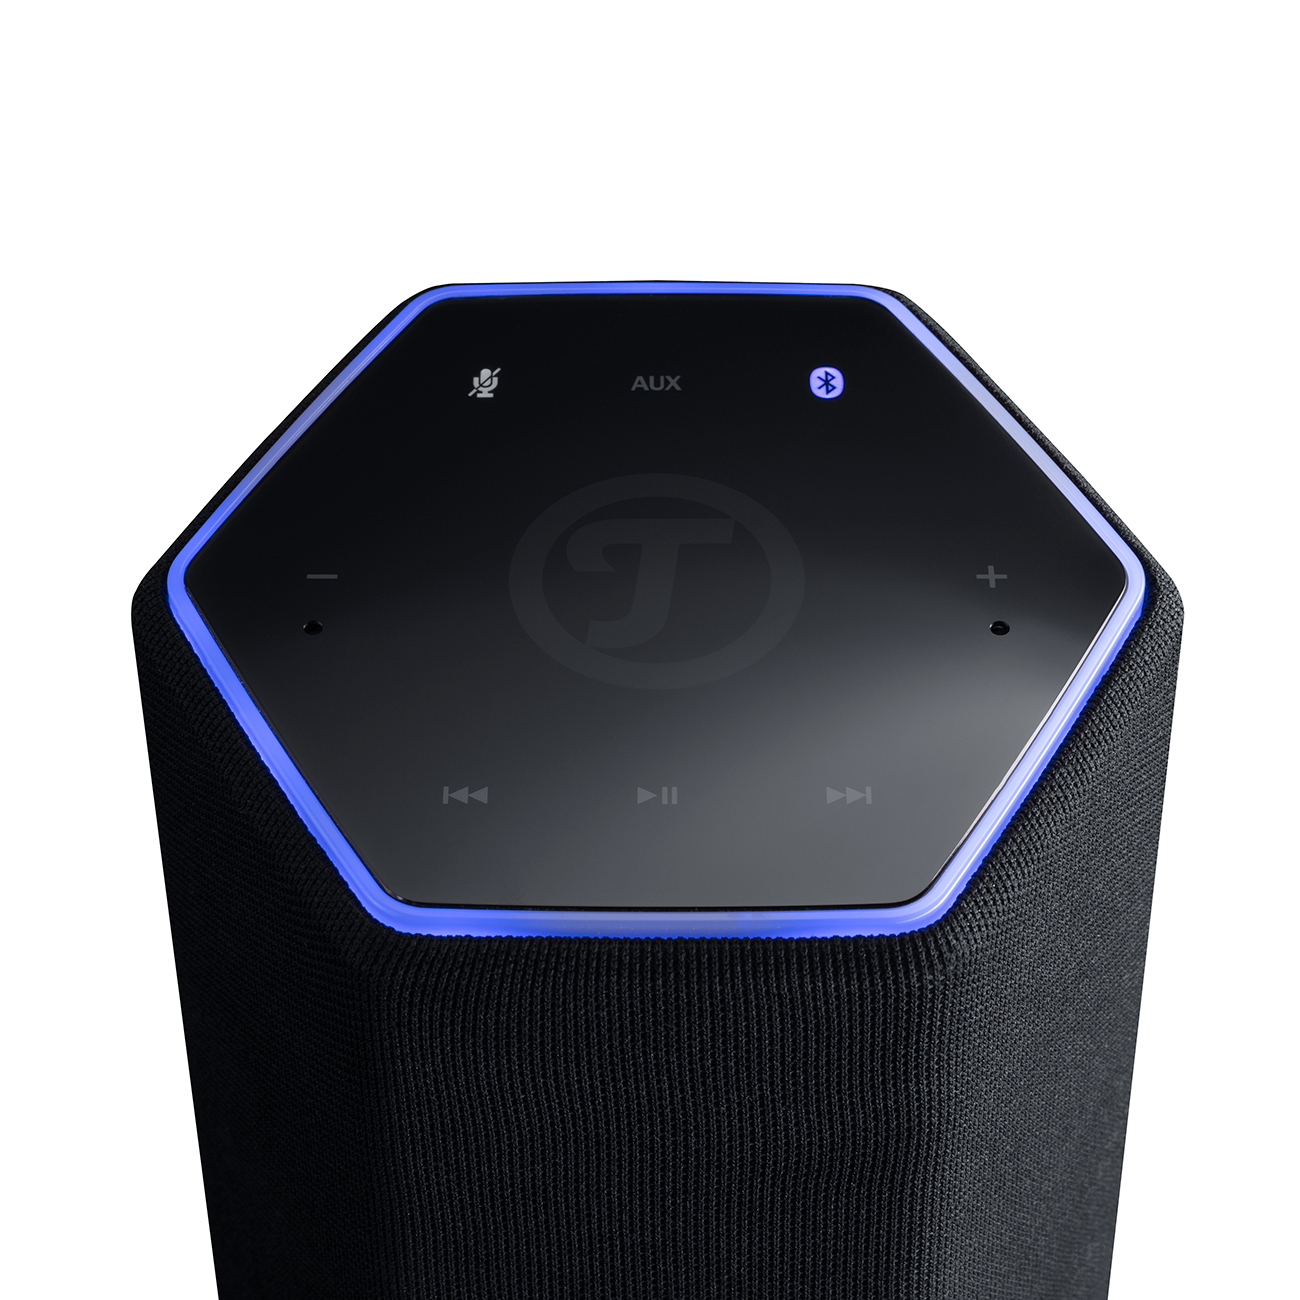 TEUFEL HOLIST S HiFi Smart Weiß Bluetooth, App-steuerbar, Speaker